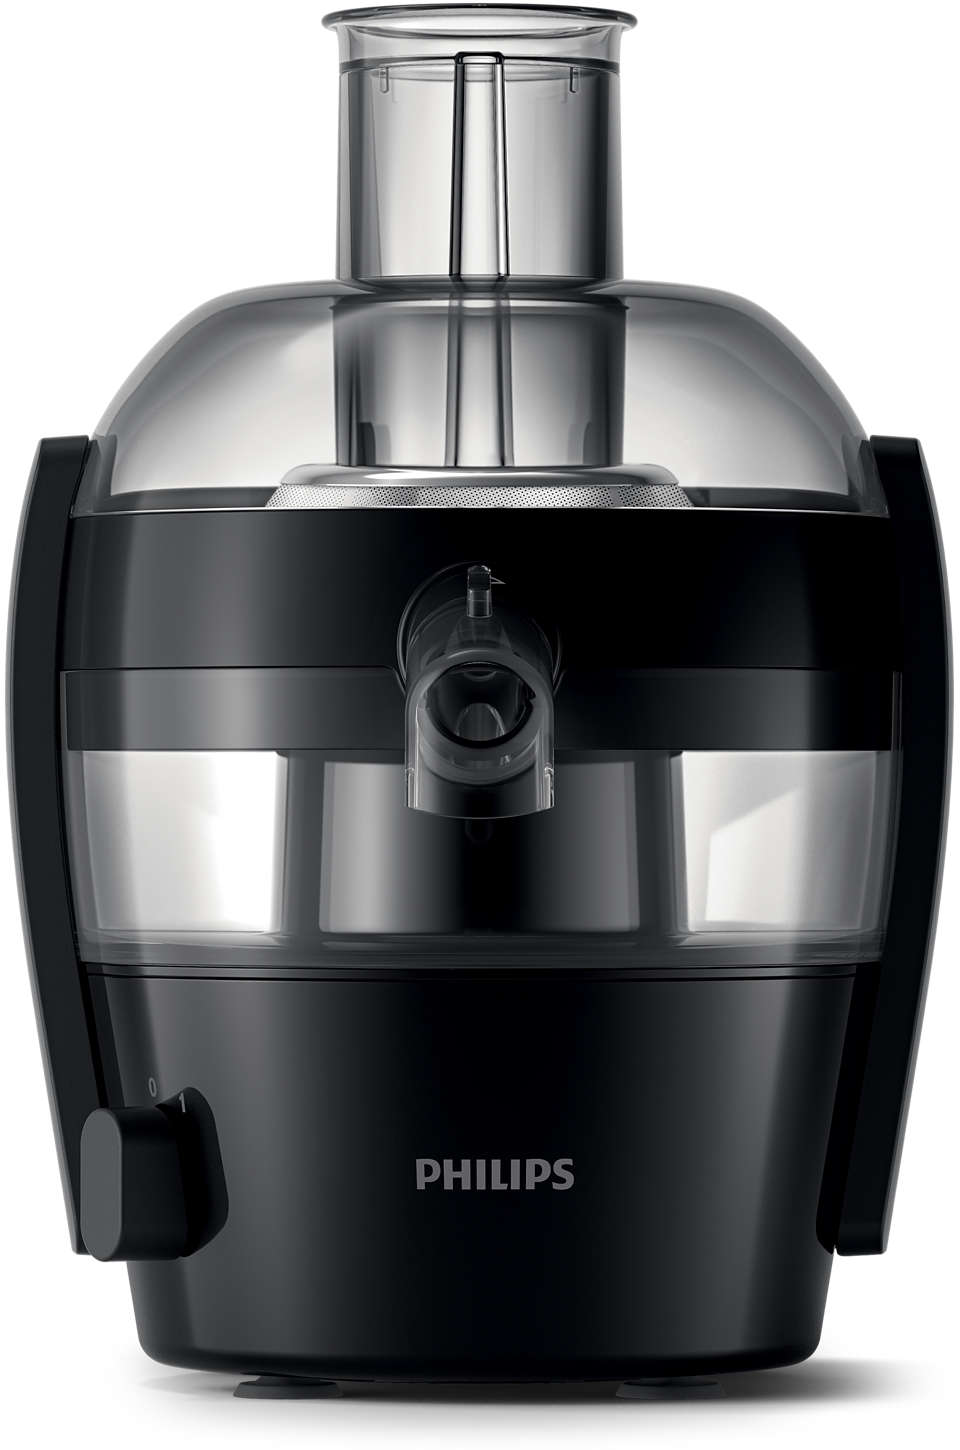 Philips Viva Collection HR1832 1.5-Litre 500-Watt Juicer Ink Black